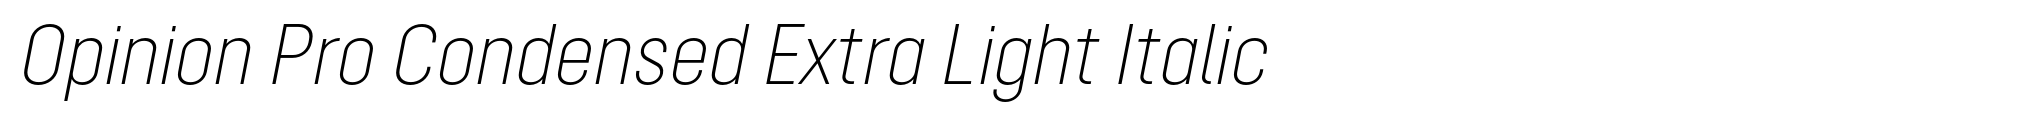 Opinion Pro Condensed Extra Light Italic image